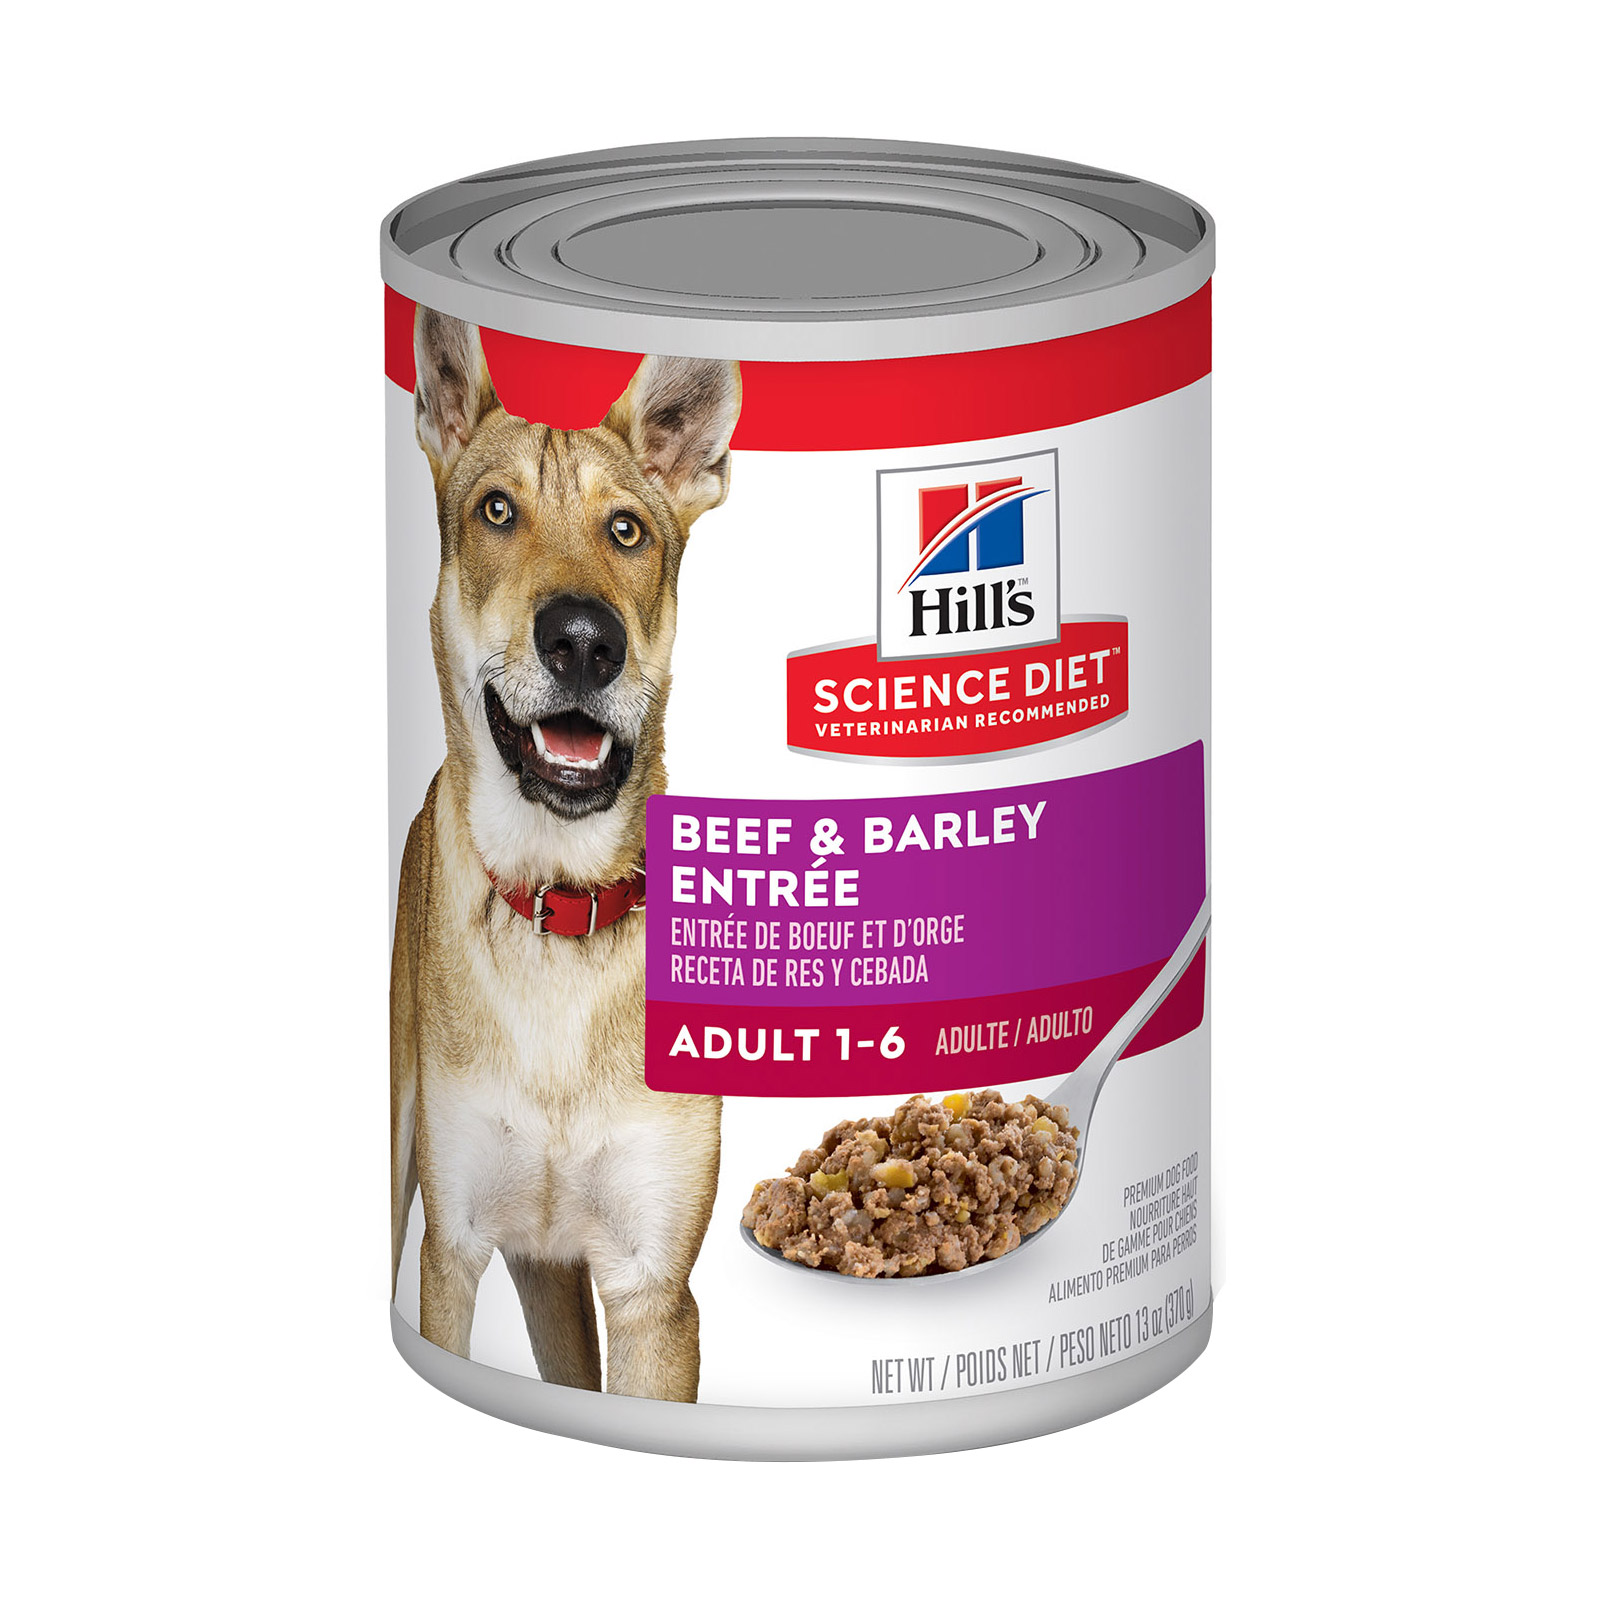 Hill's Science Diet Adult Beef & Barley Entrée Canned Dog Food for Food